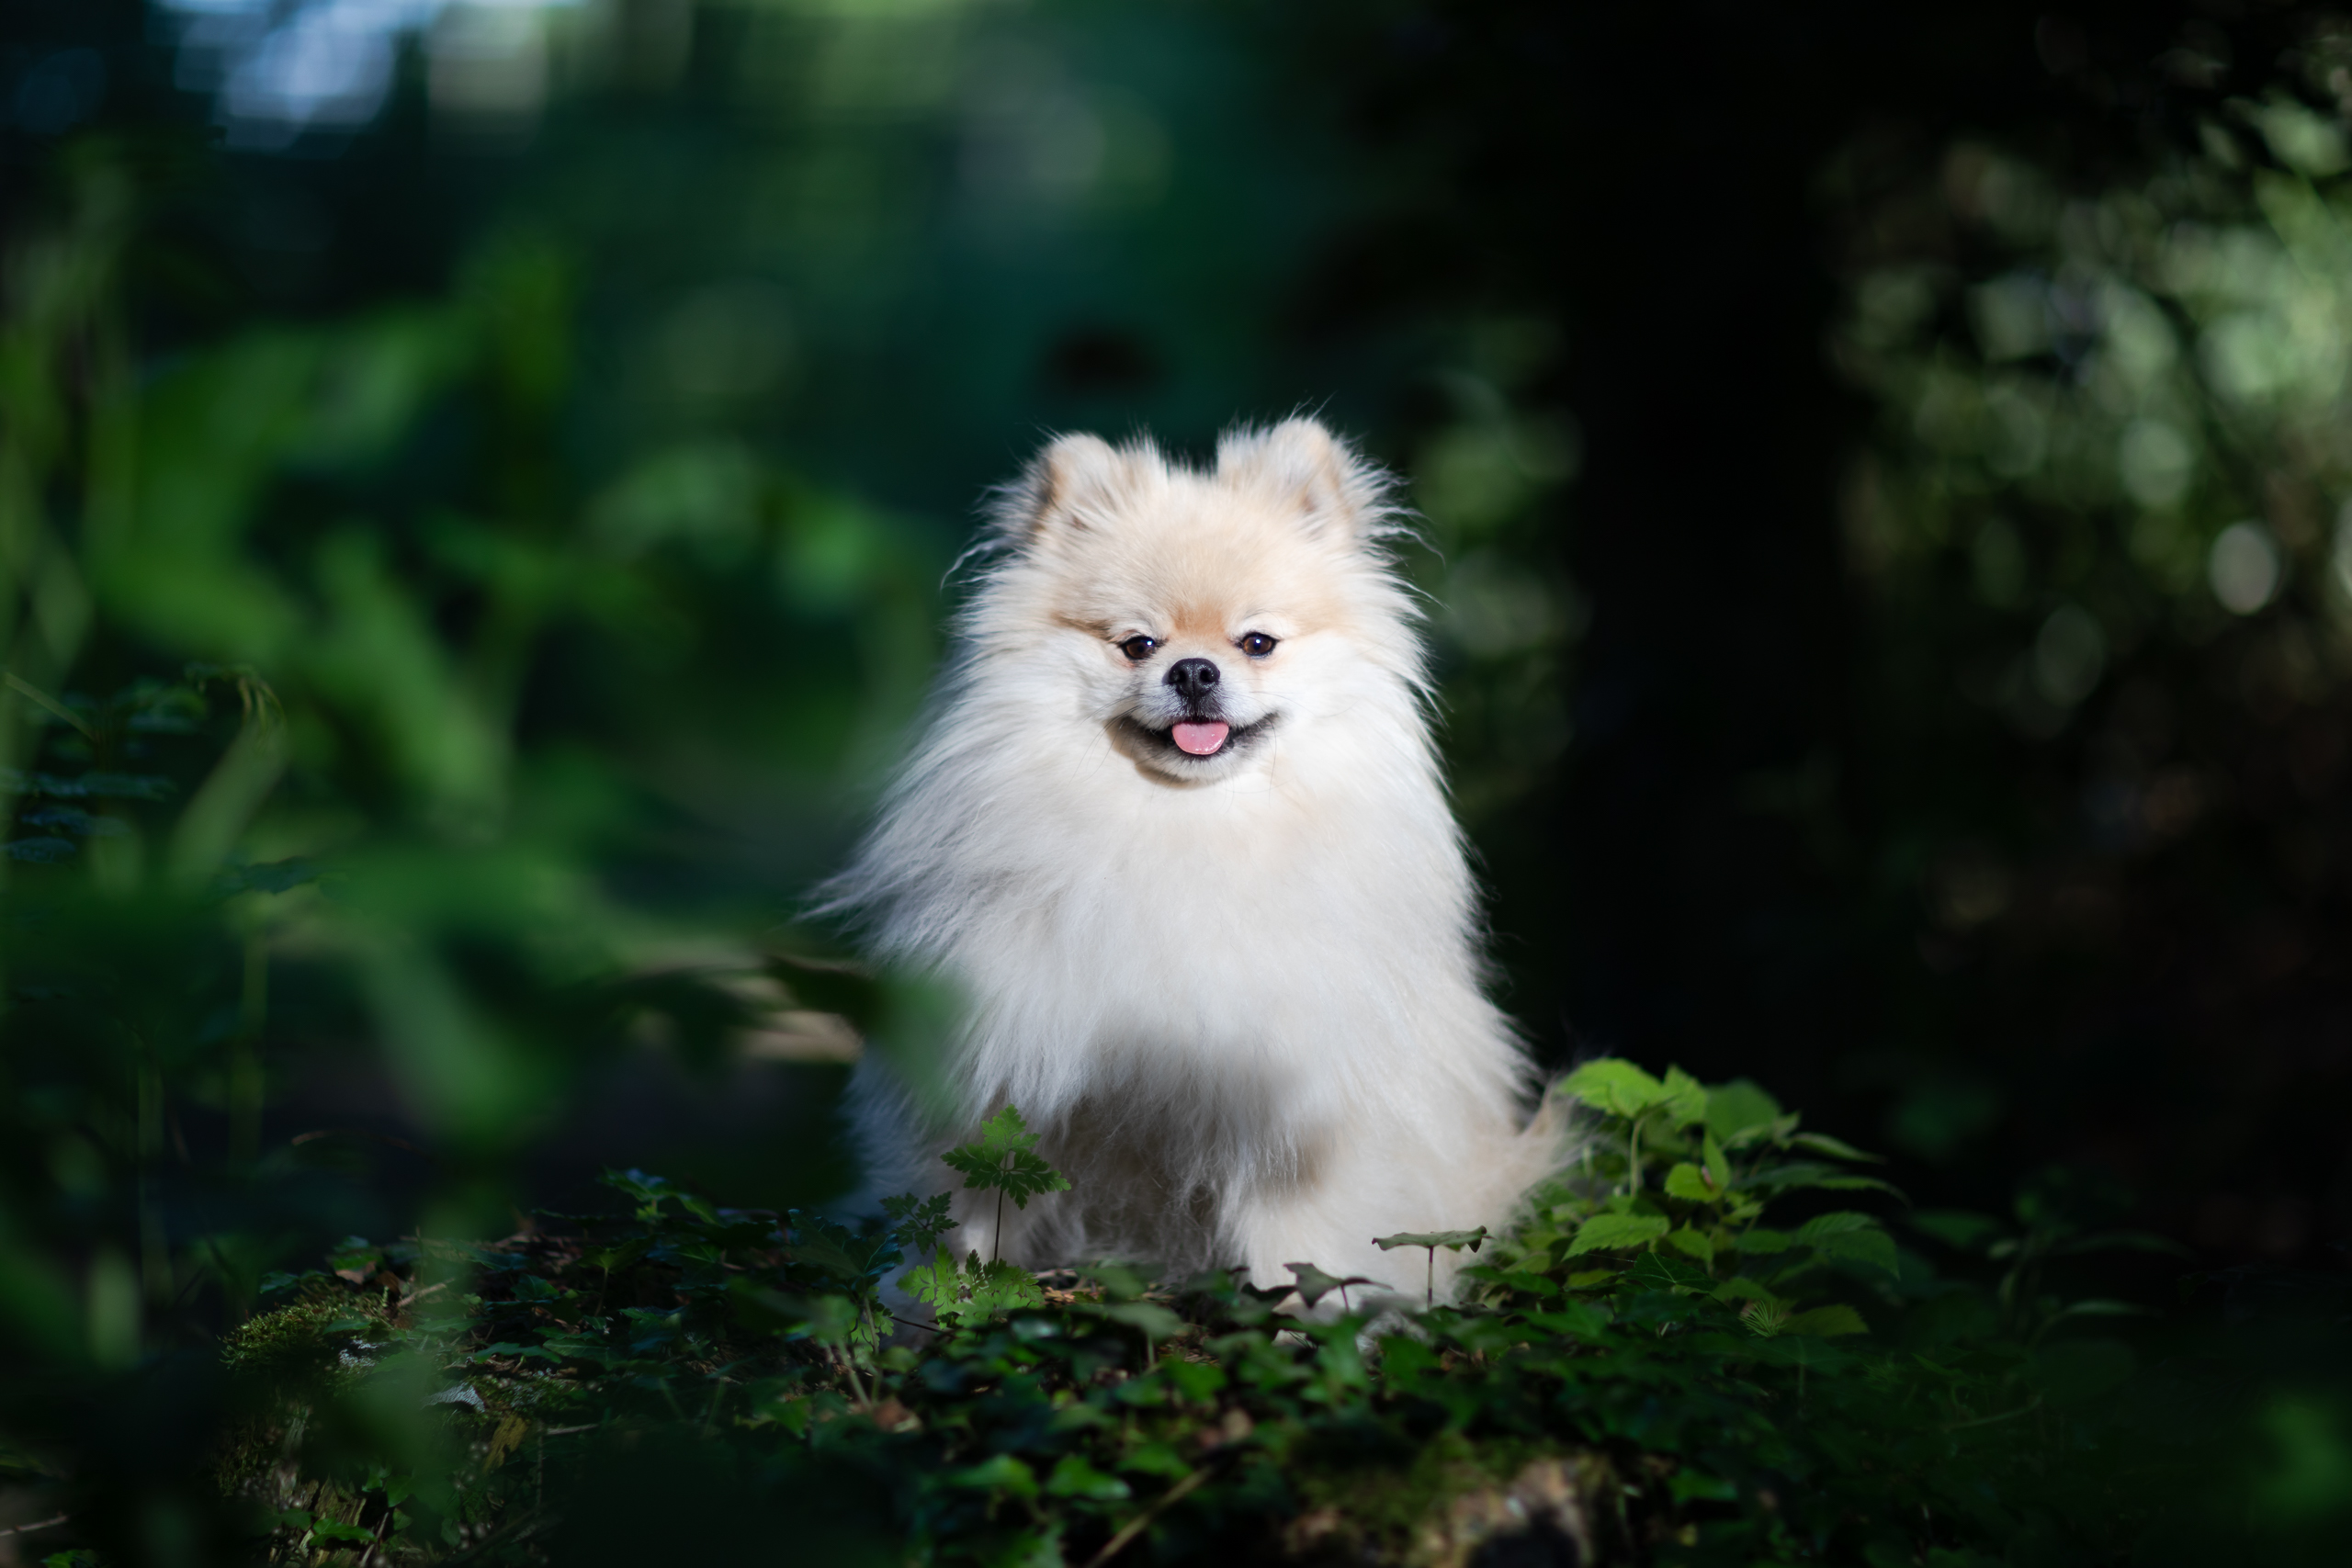 Hund;Portfolio;Tierfotografie;lumo obscura;outdoor